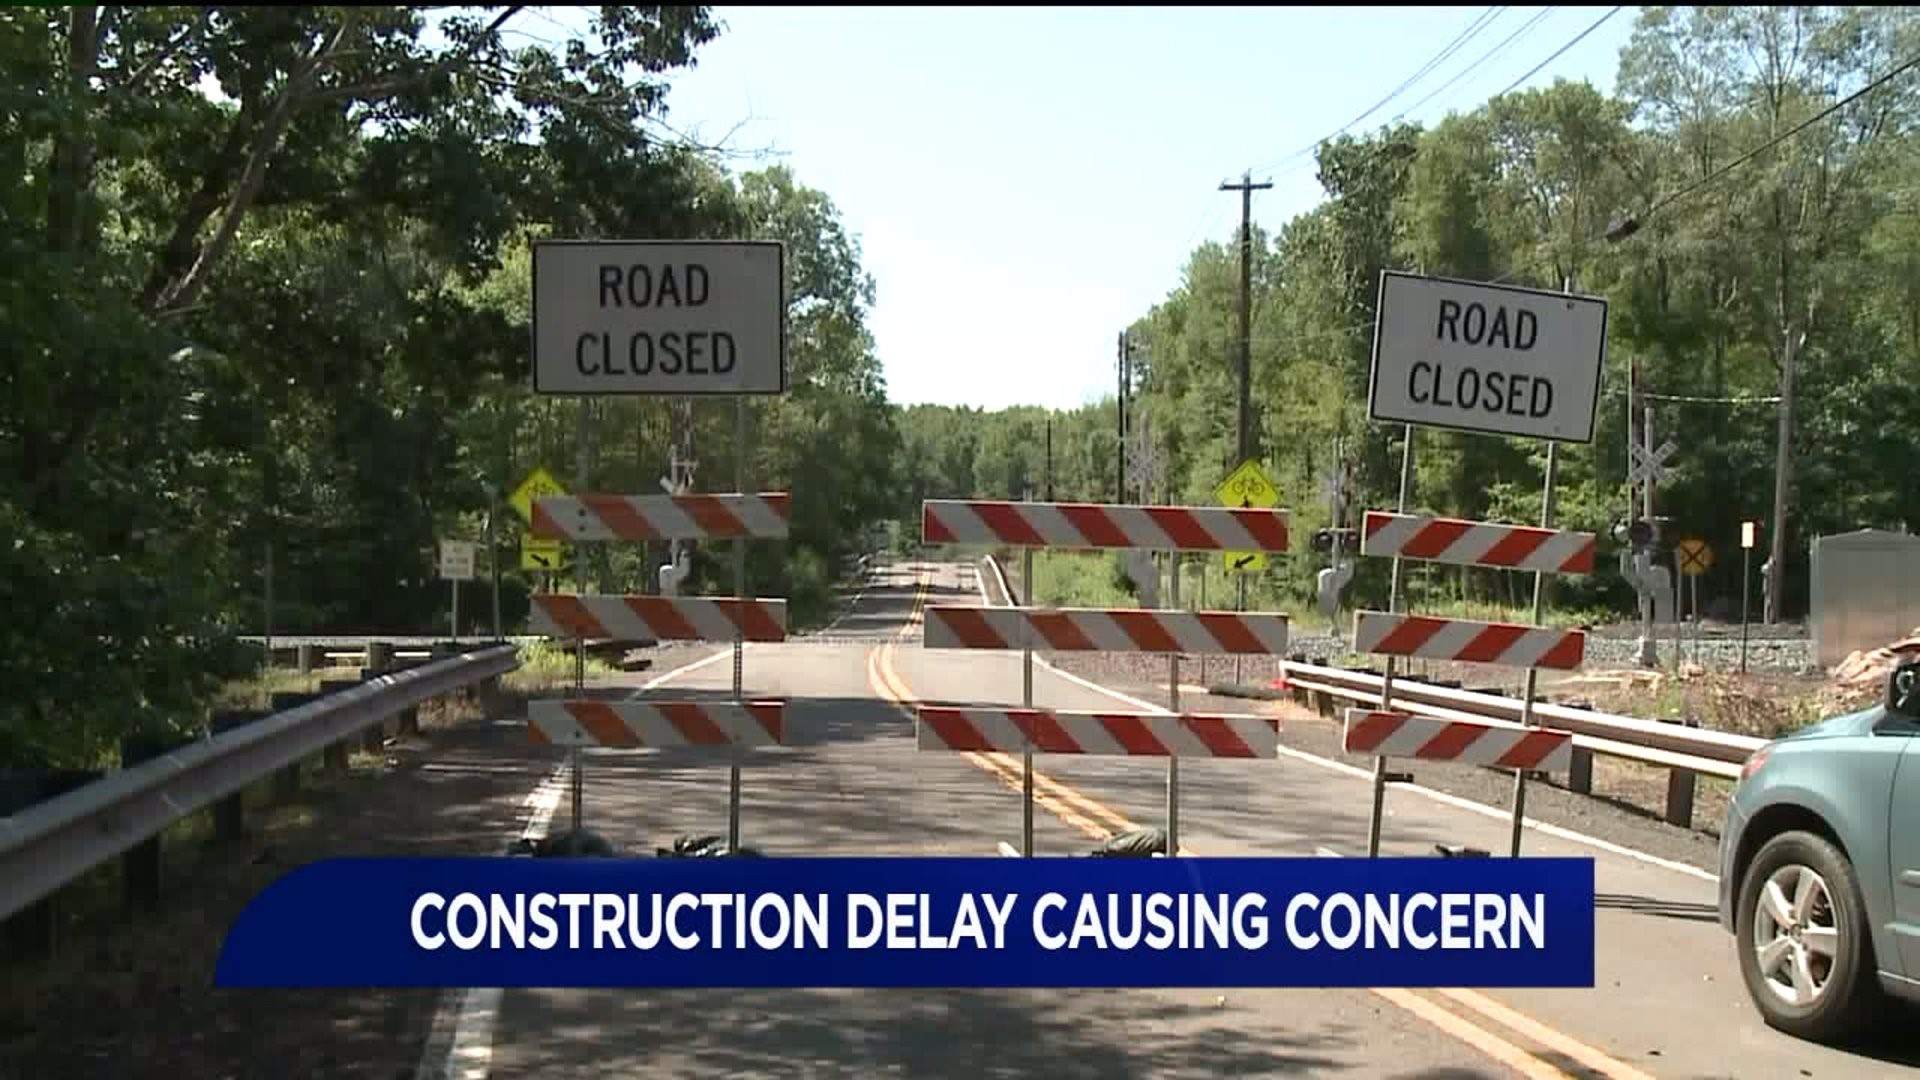 Railroad Construction Delay Cause for Concern